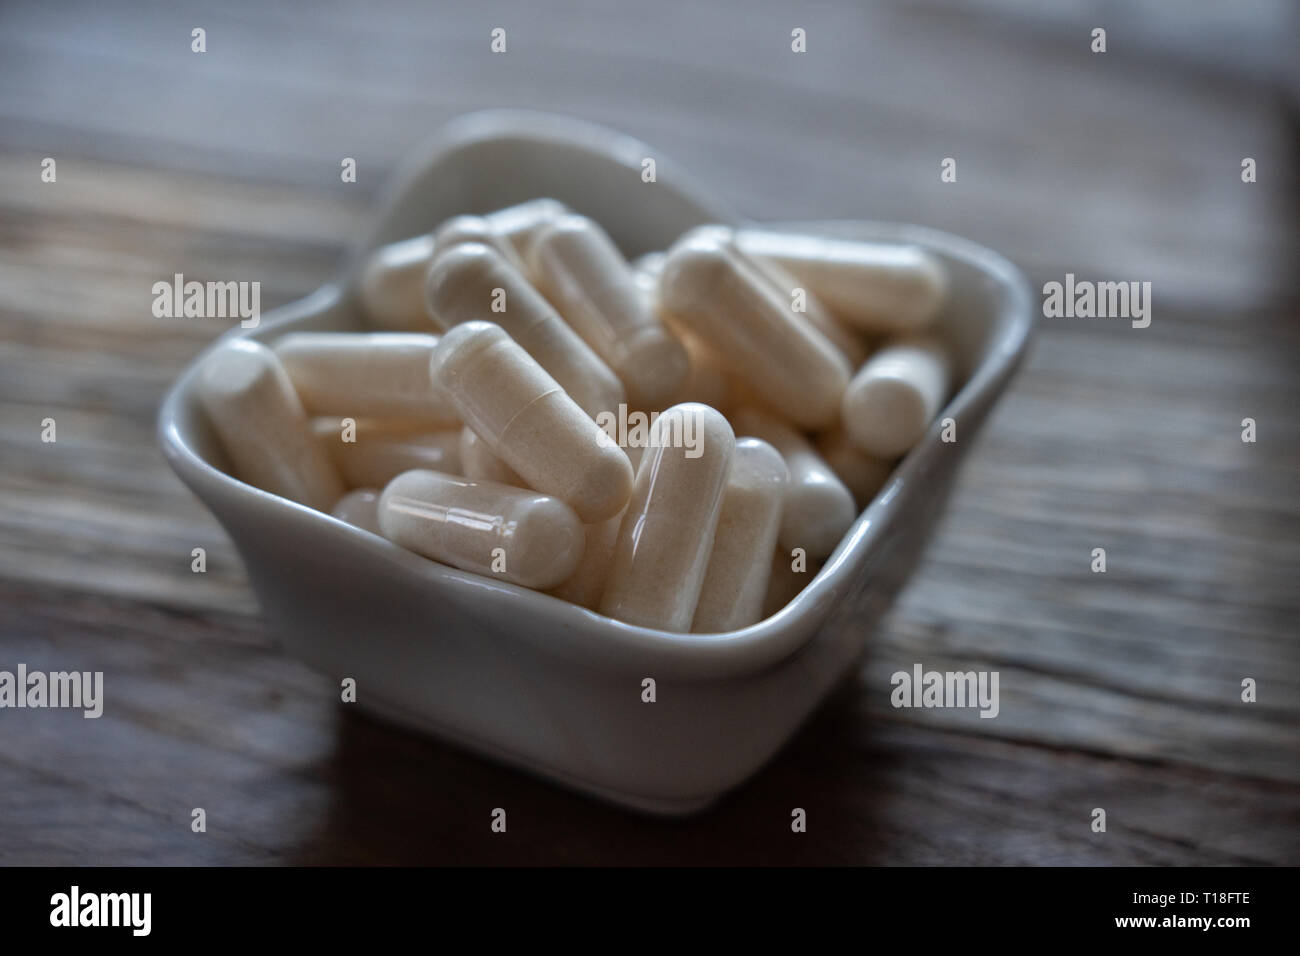 vitimin pills piled into a small porcelain bowl Stock Photo